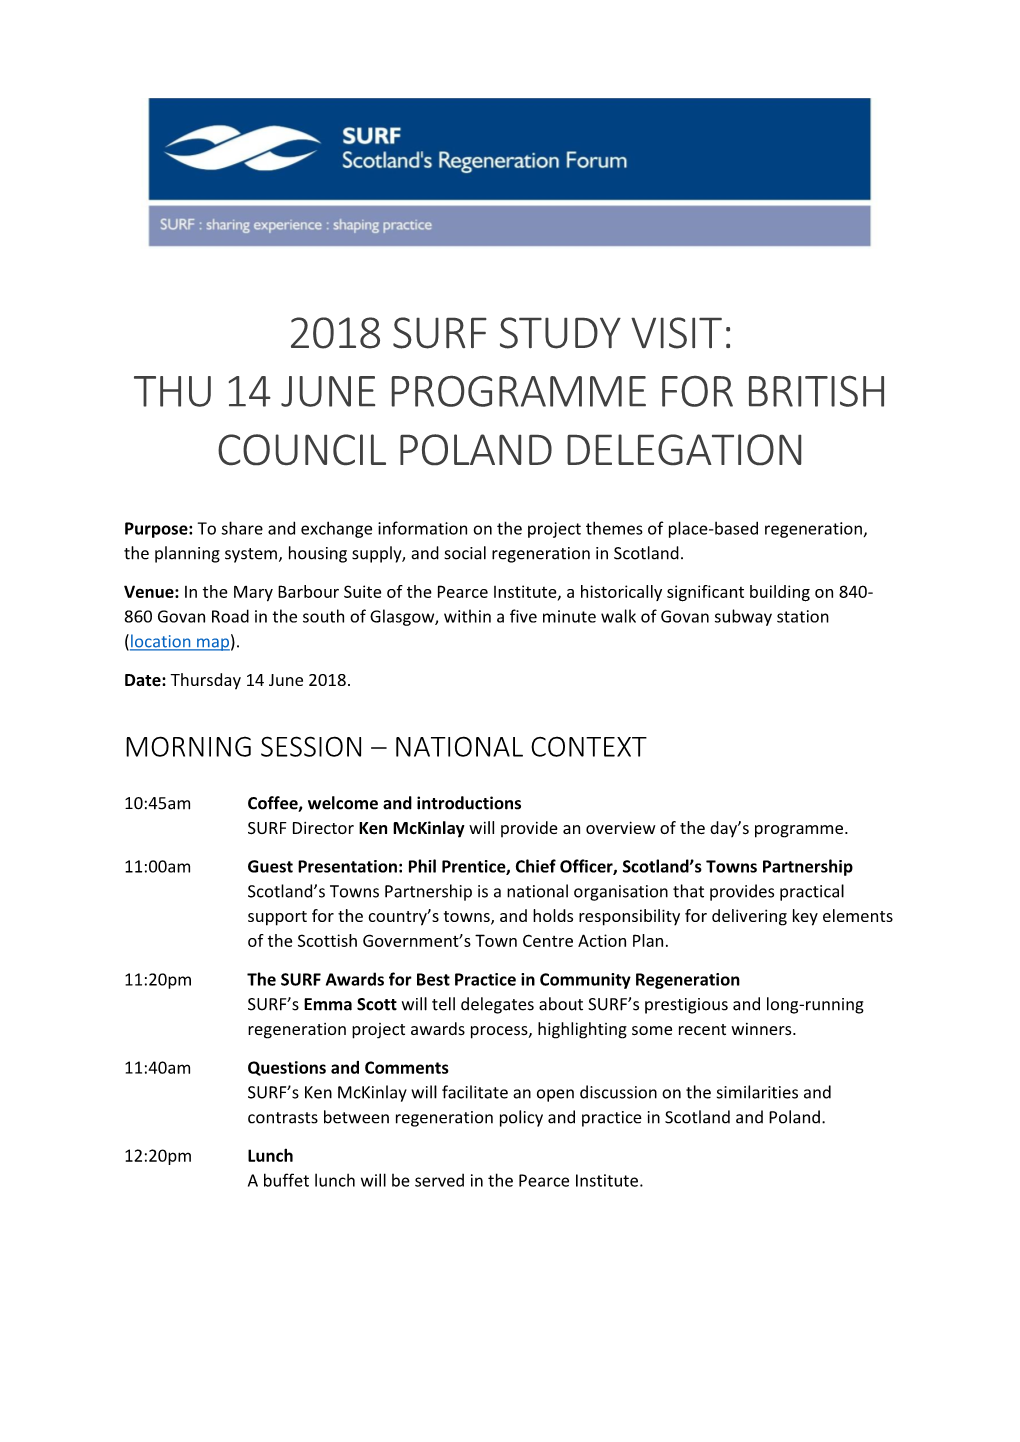 2018 Surf Study Visit: Thu 14 June Programme for British Council Poland Delegation